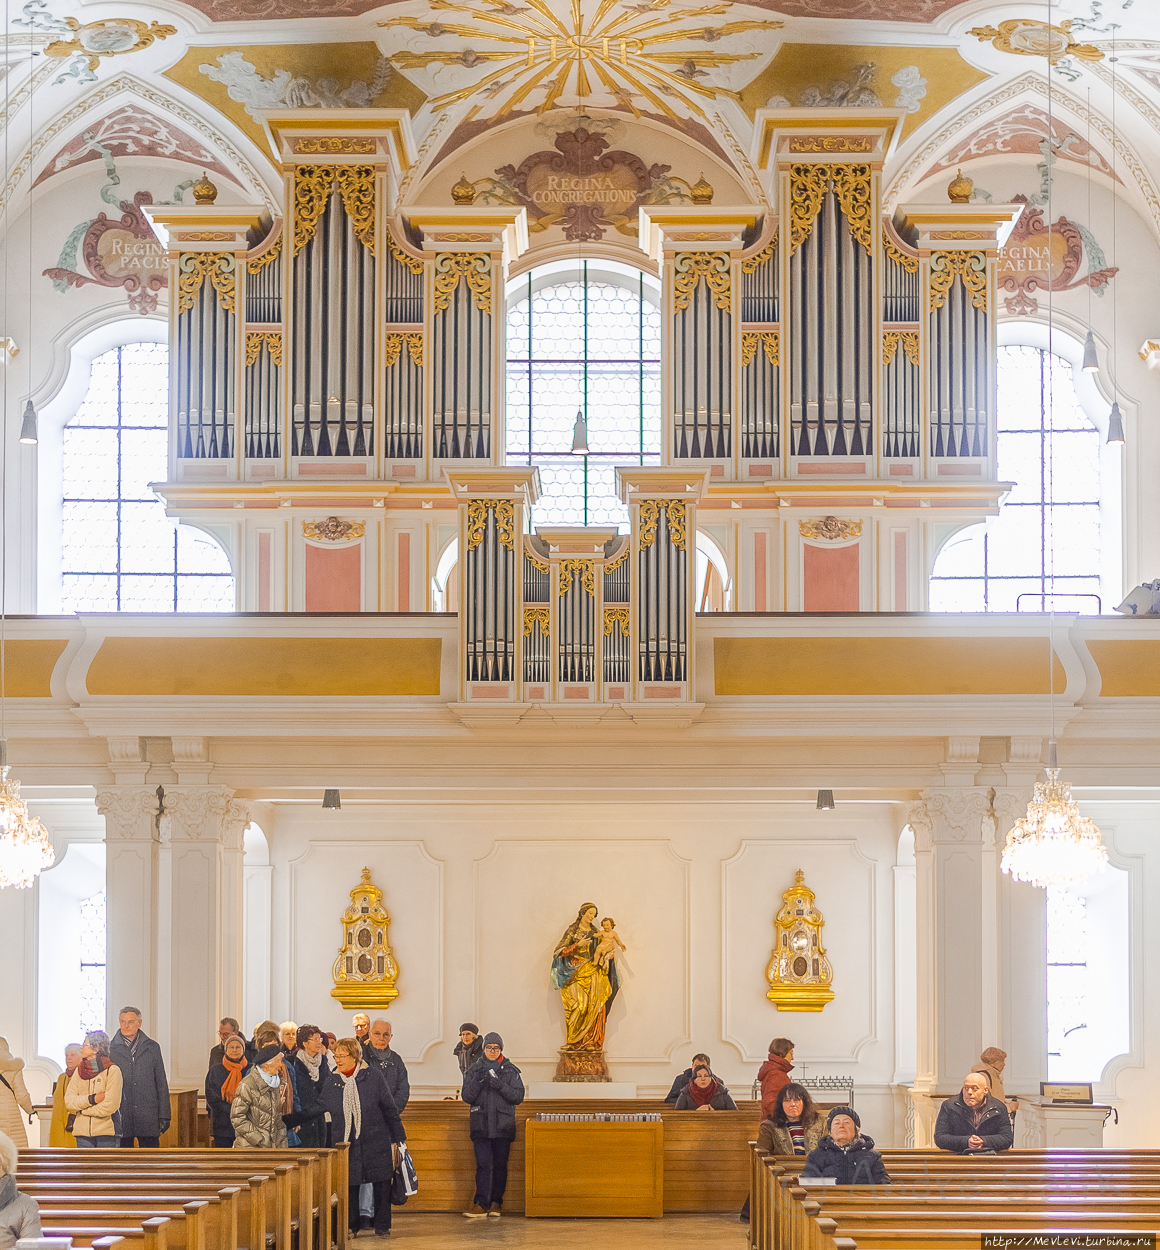 Зал богослужений церкви Бюргерский зал Мюнхен, Германия